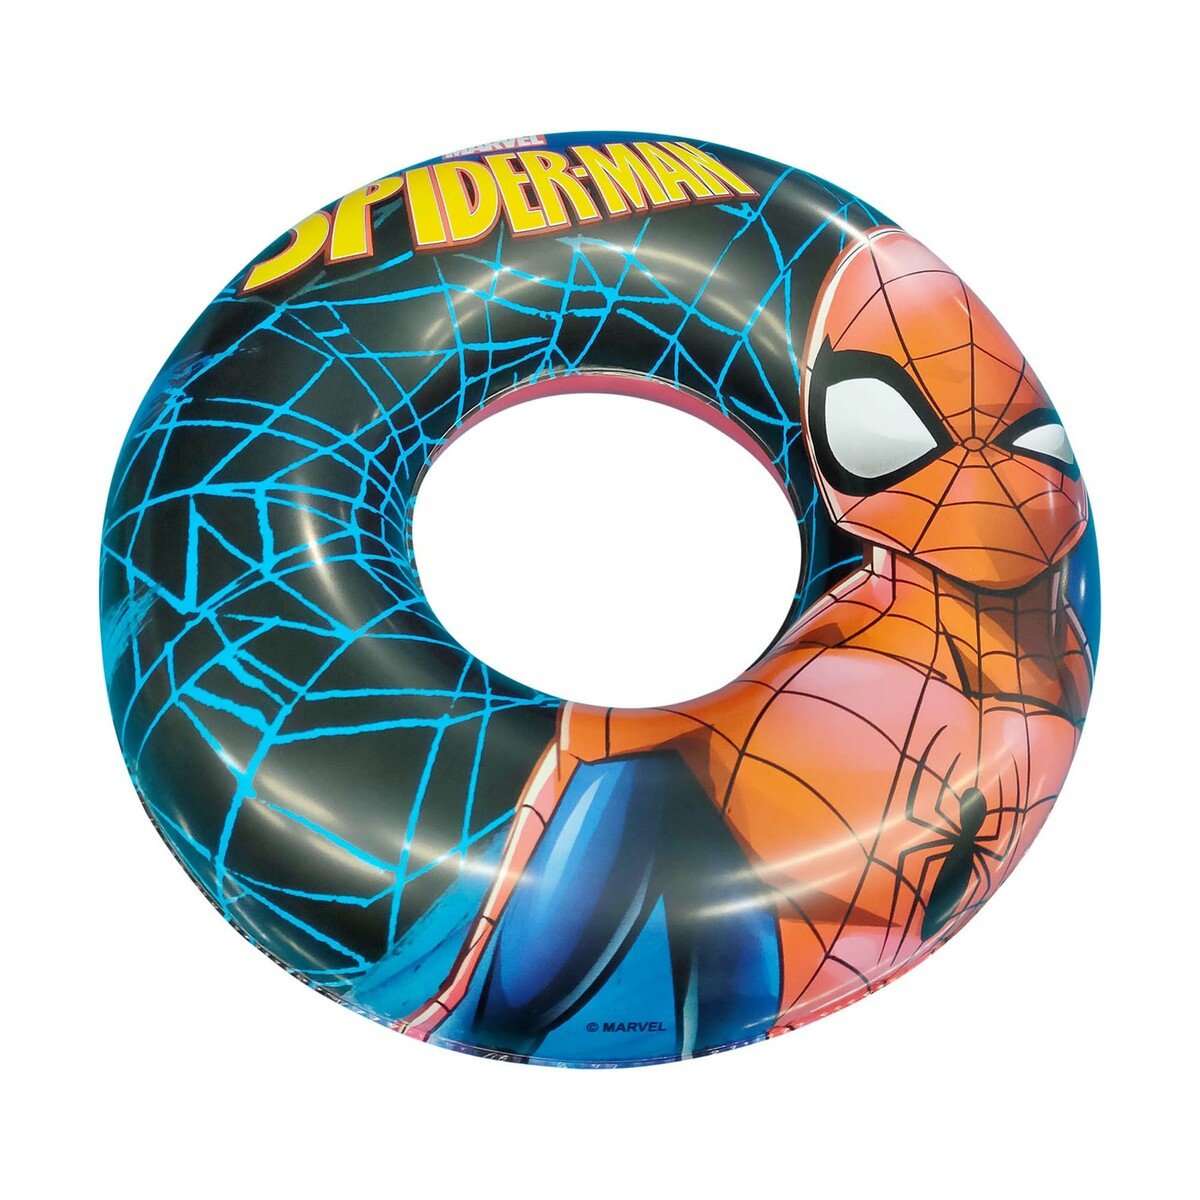 Spiderman Printed Kids Inflatable Swim Ring - Multi Color  TRHA6003